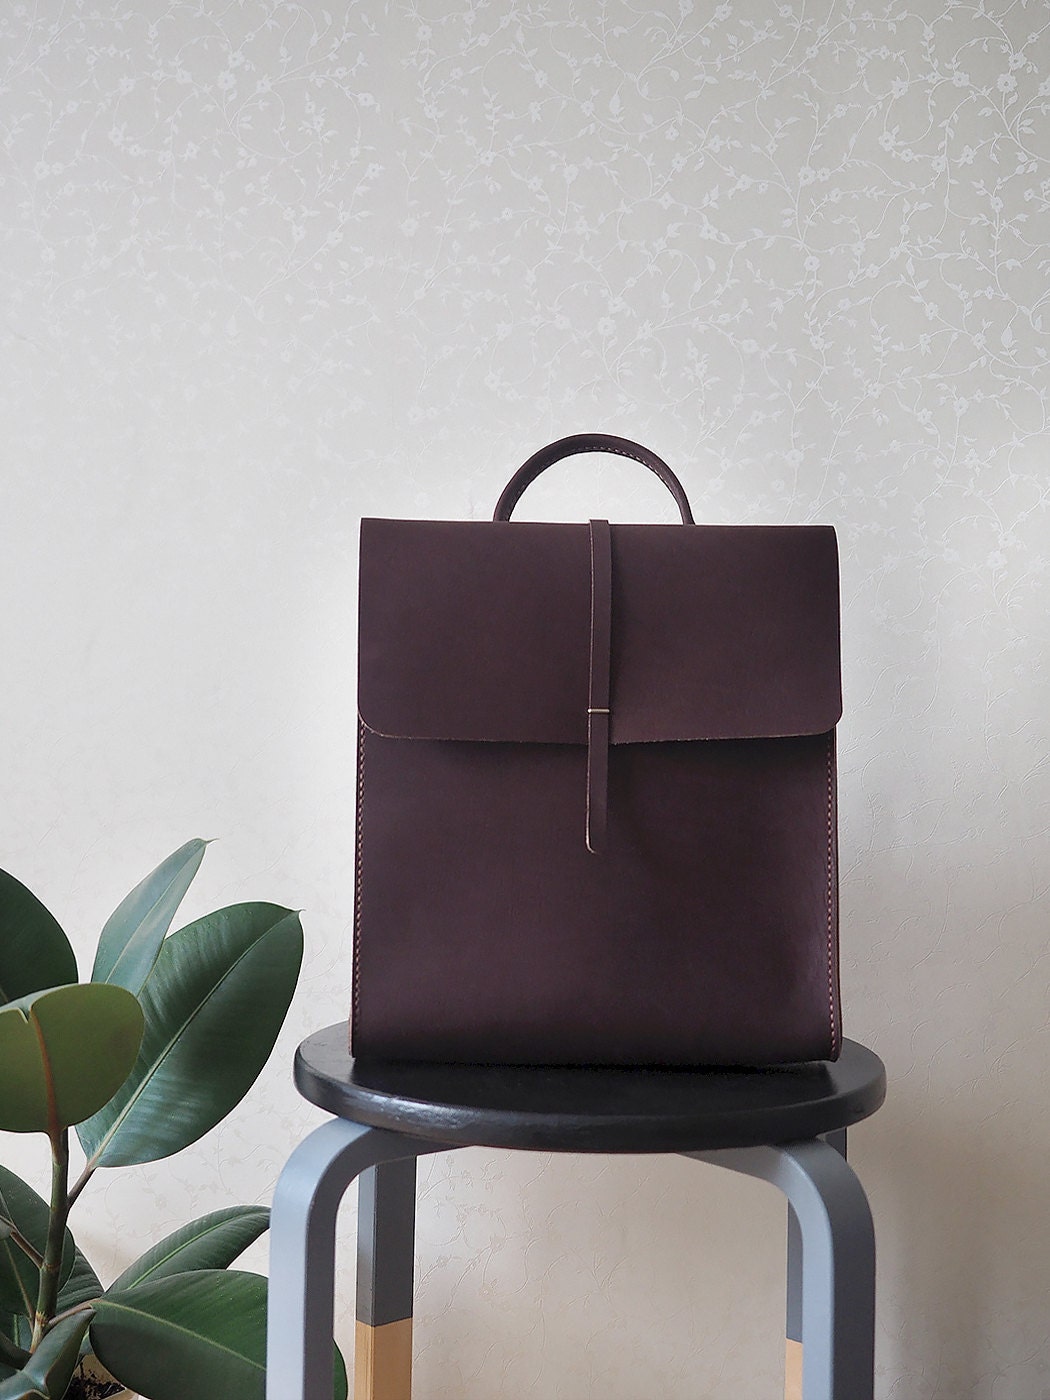 Leather backpack for women. Minimalist bag. Handmade genuine | Etsy